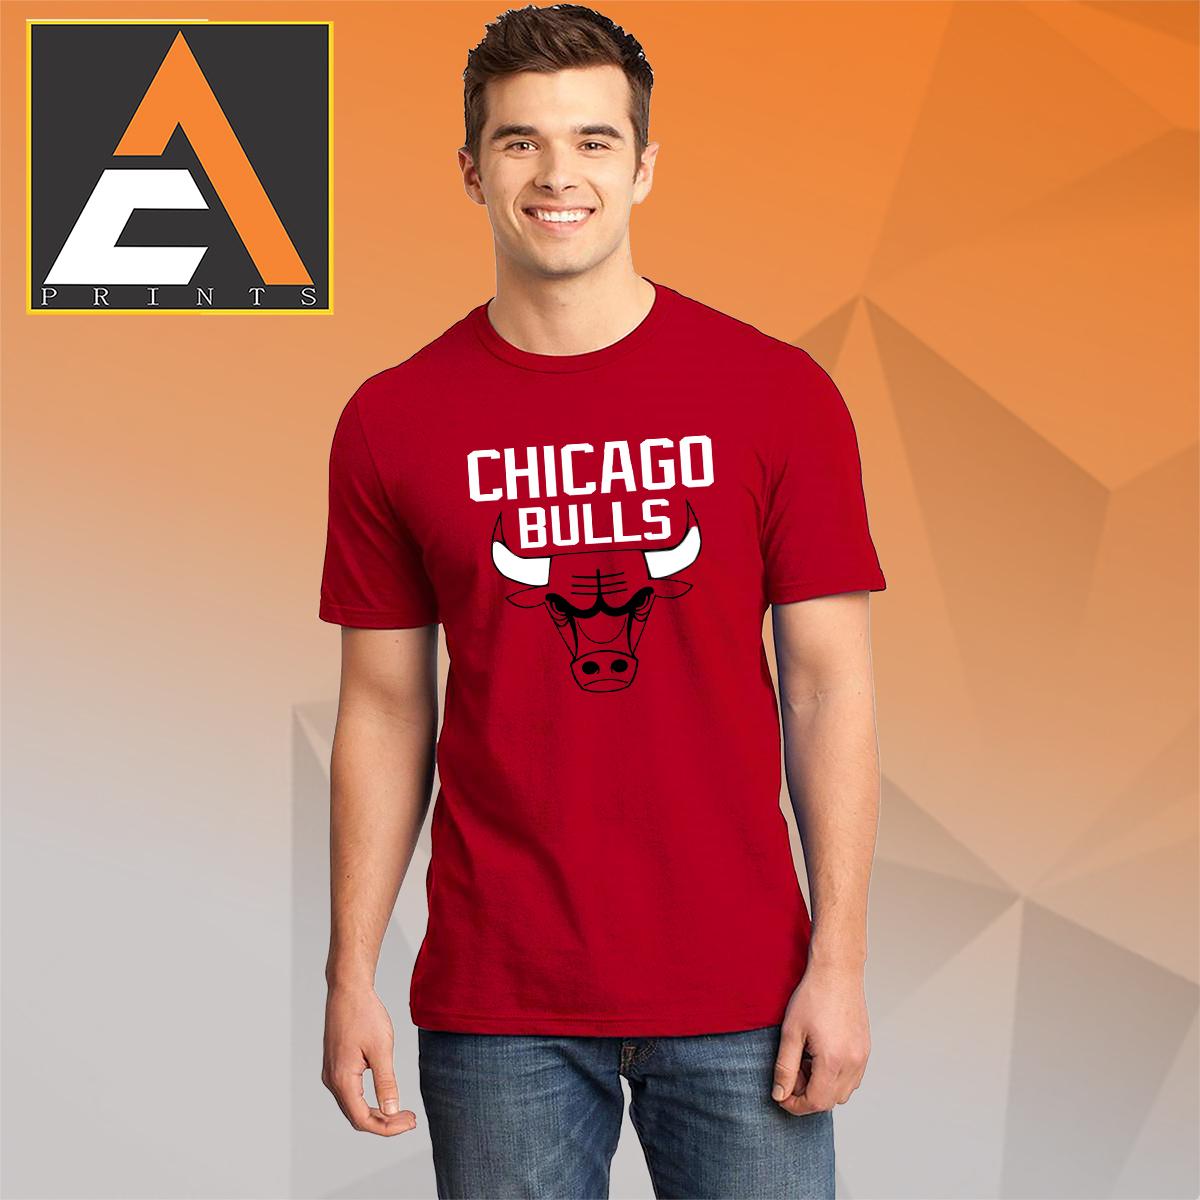 unique chicago bulls shirts